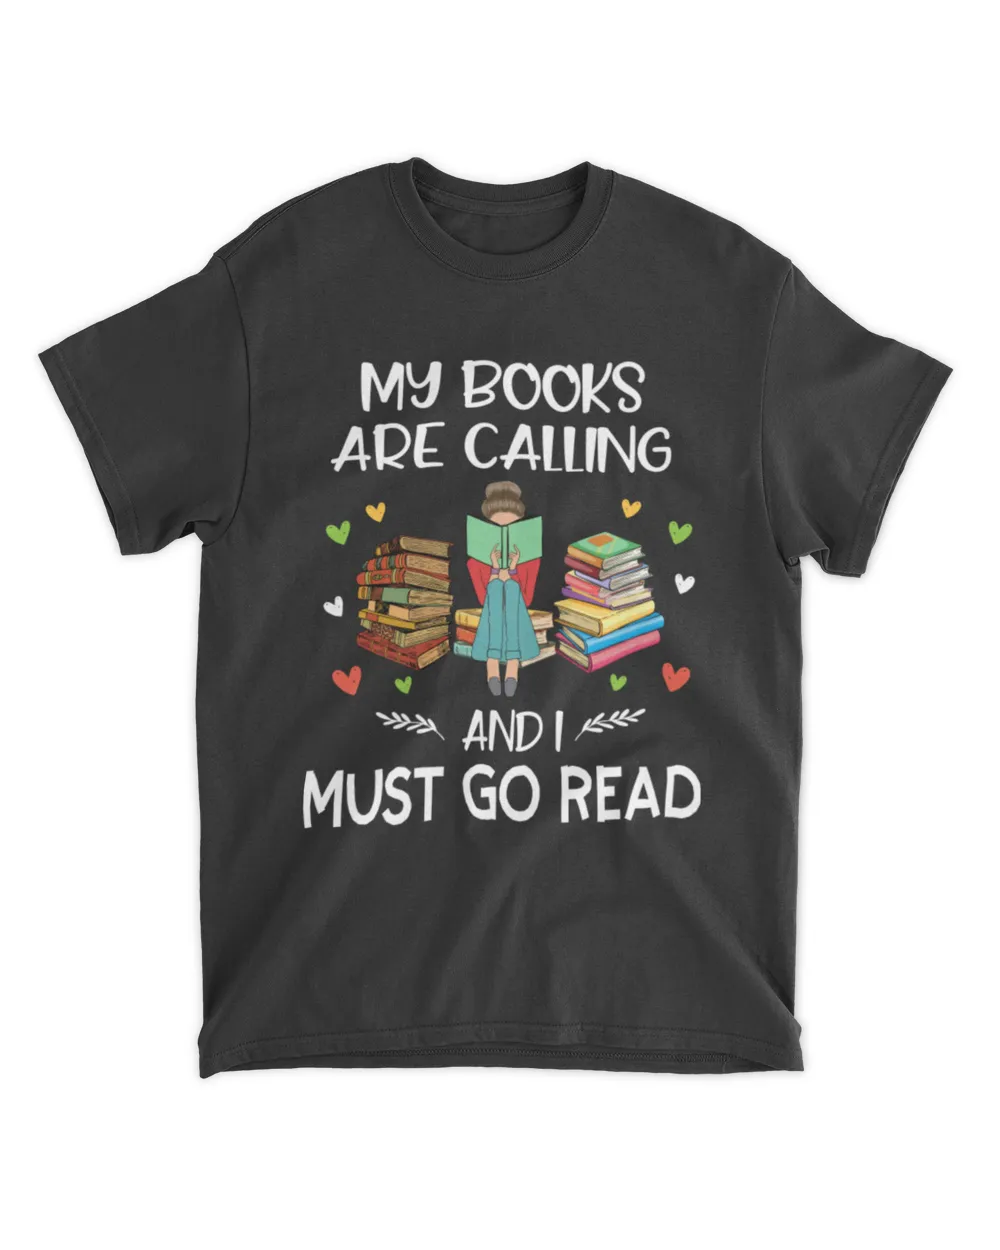 Books calling